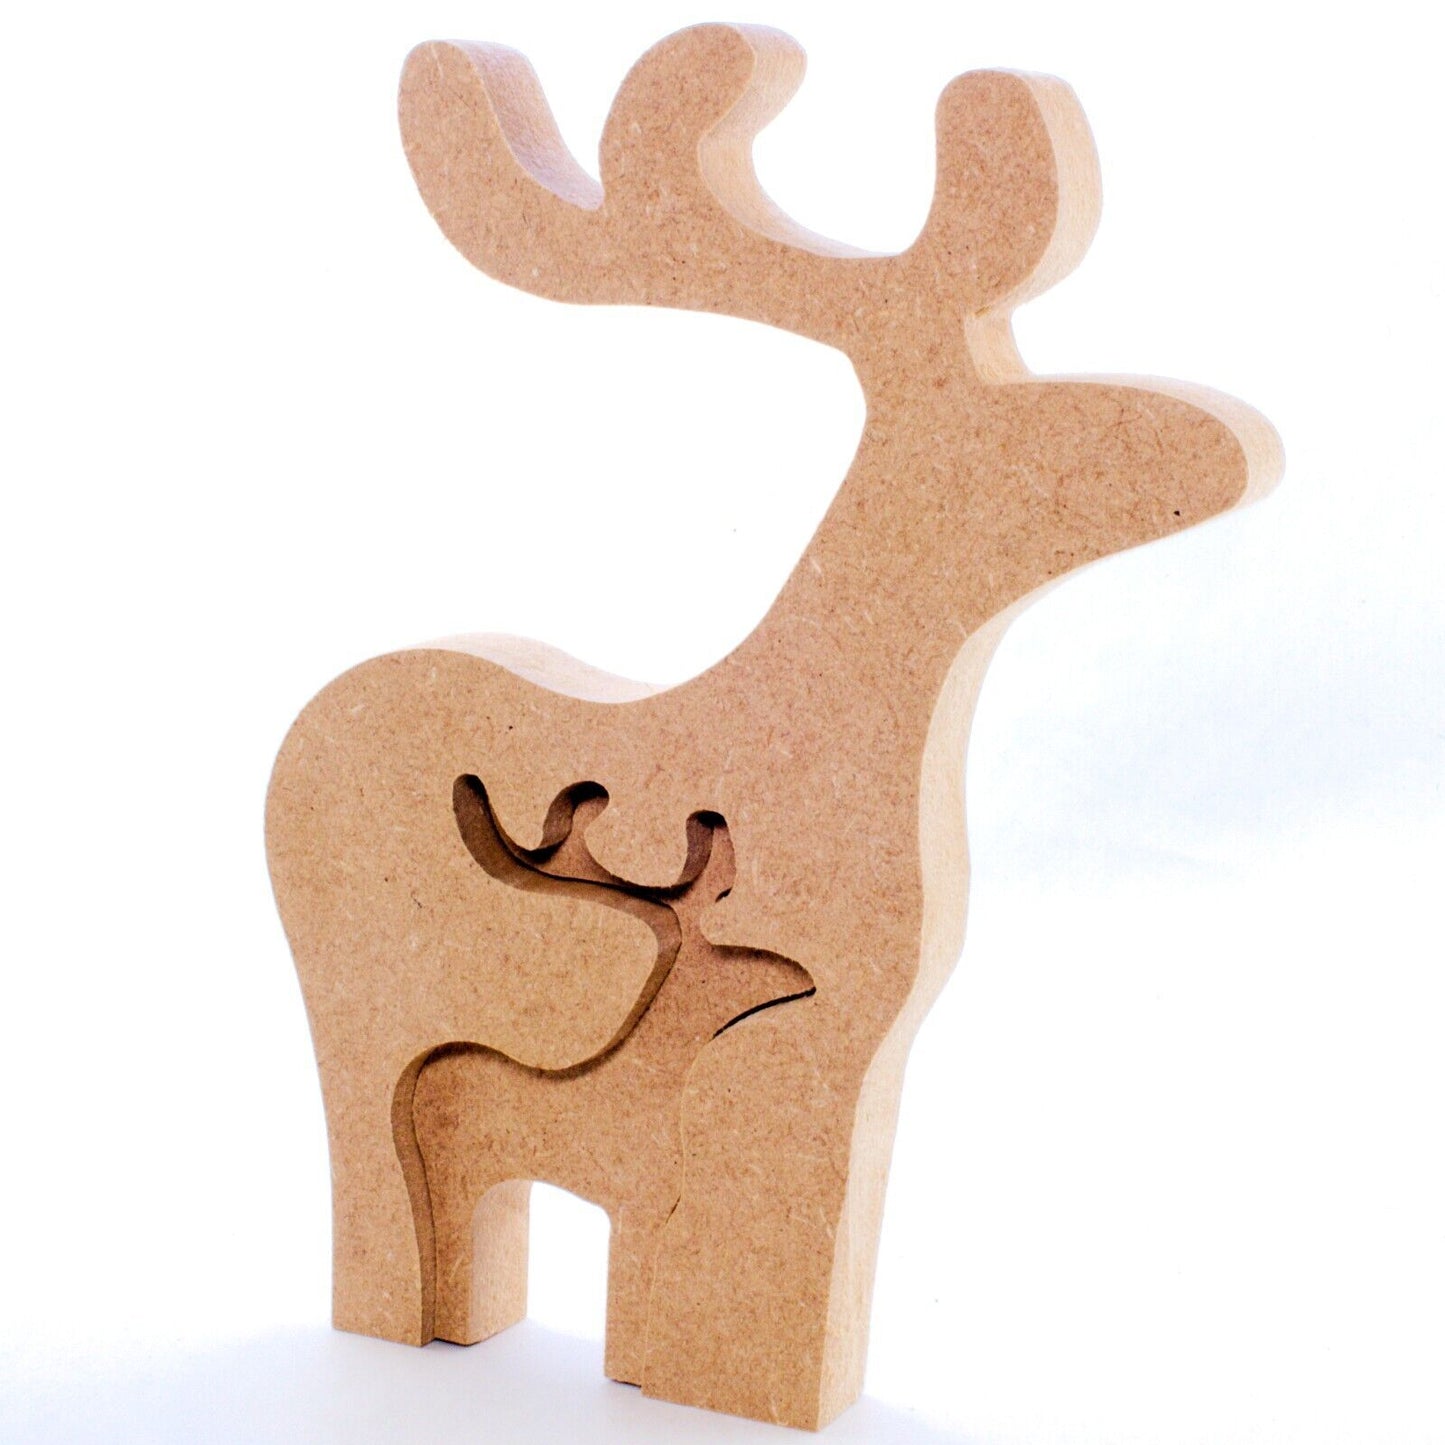 Free Standing 18mm Reindeer Slotting MDF Craft Shape 15cm to 30cm. Christmas